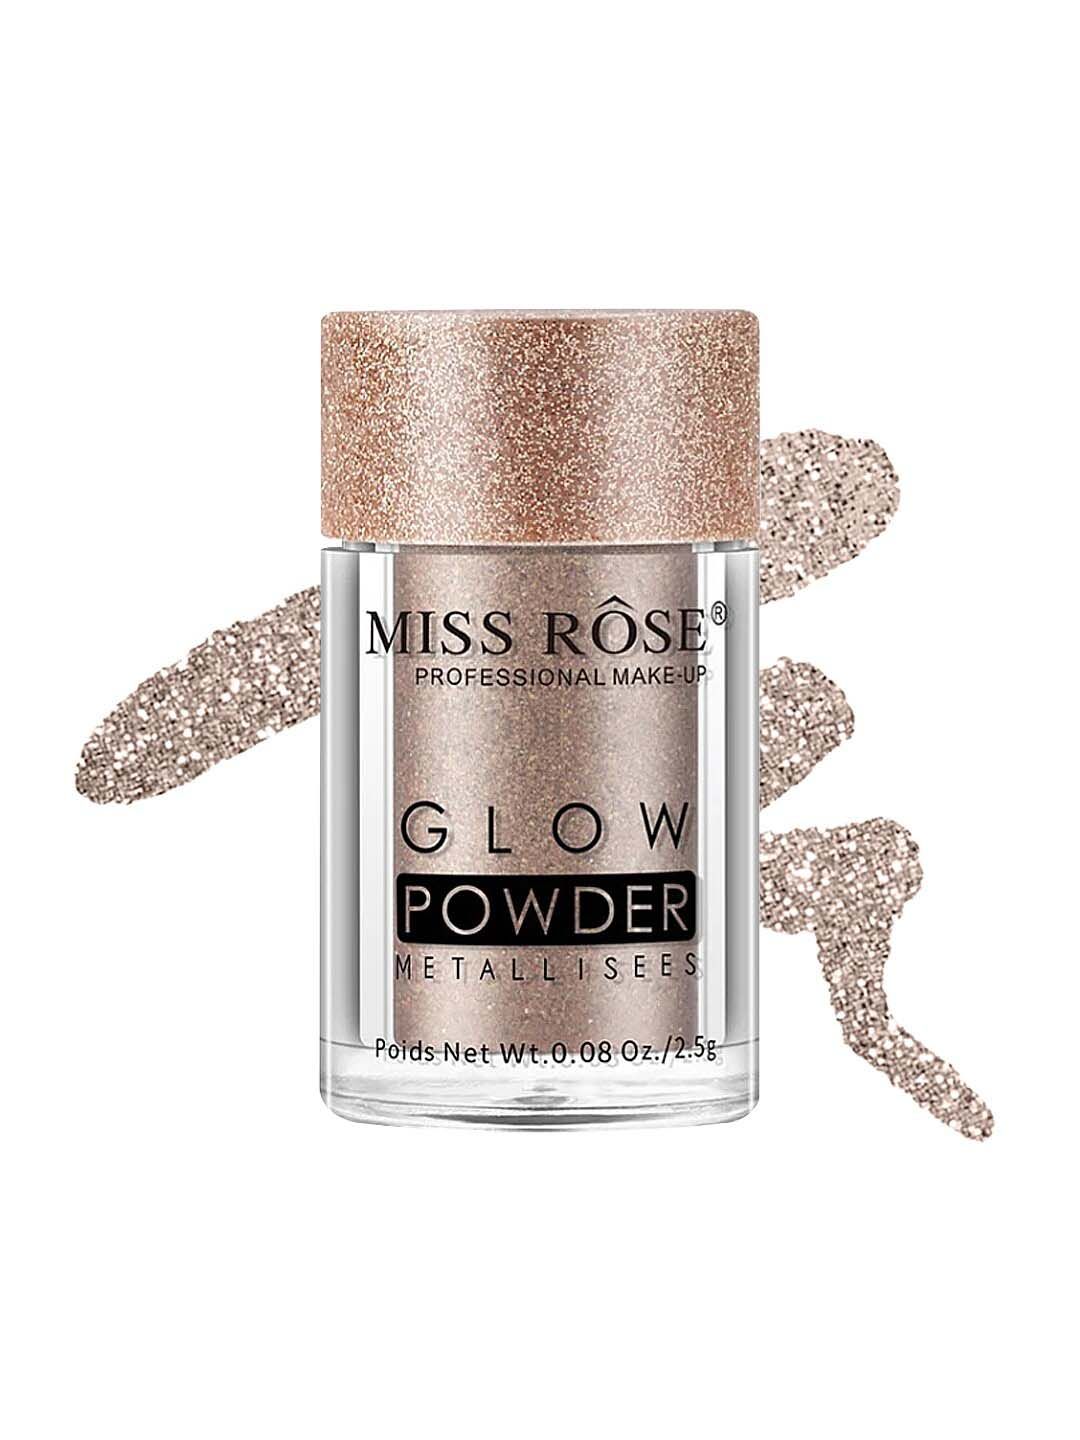 MISS ROSE Pigment Eyeshadow Glow Powder Metalises Price in India